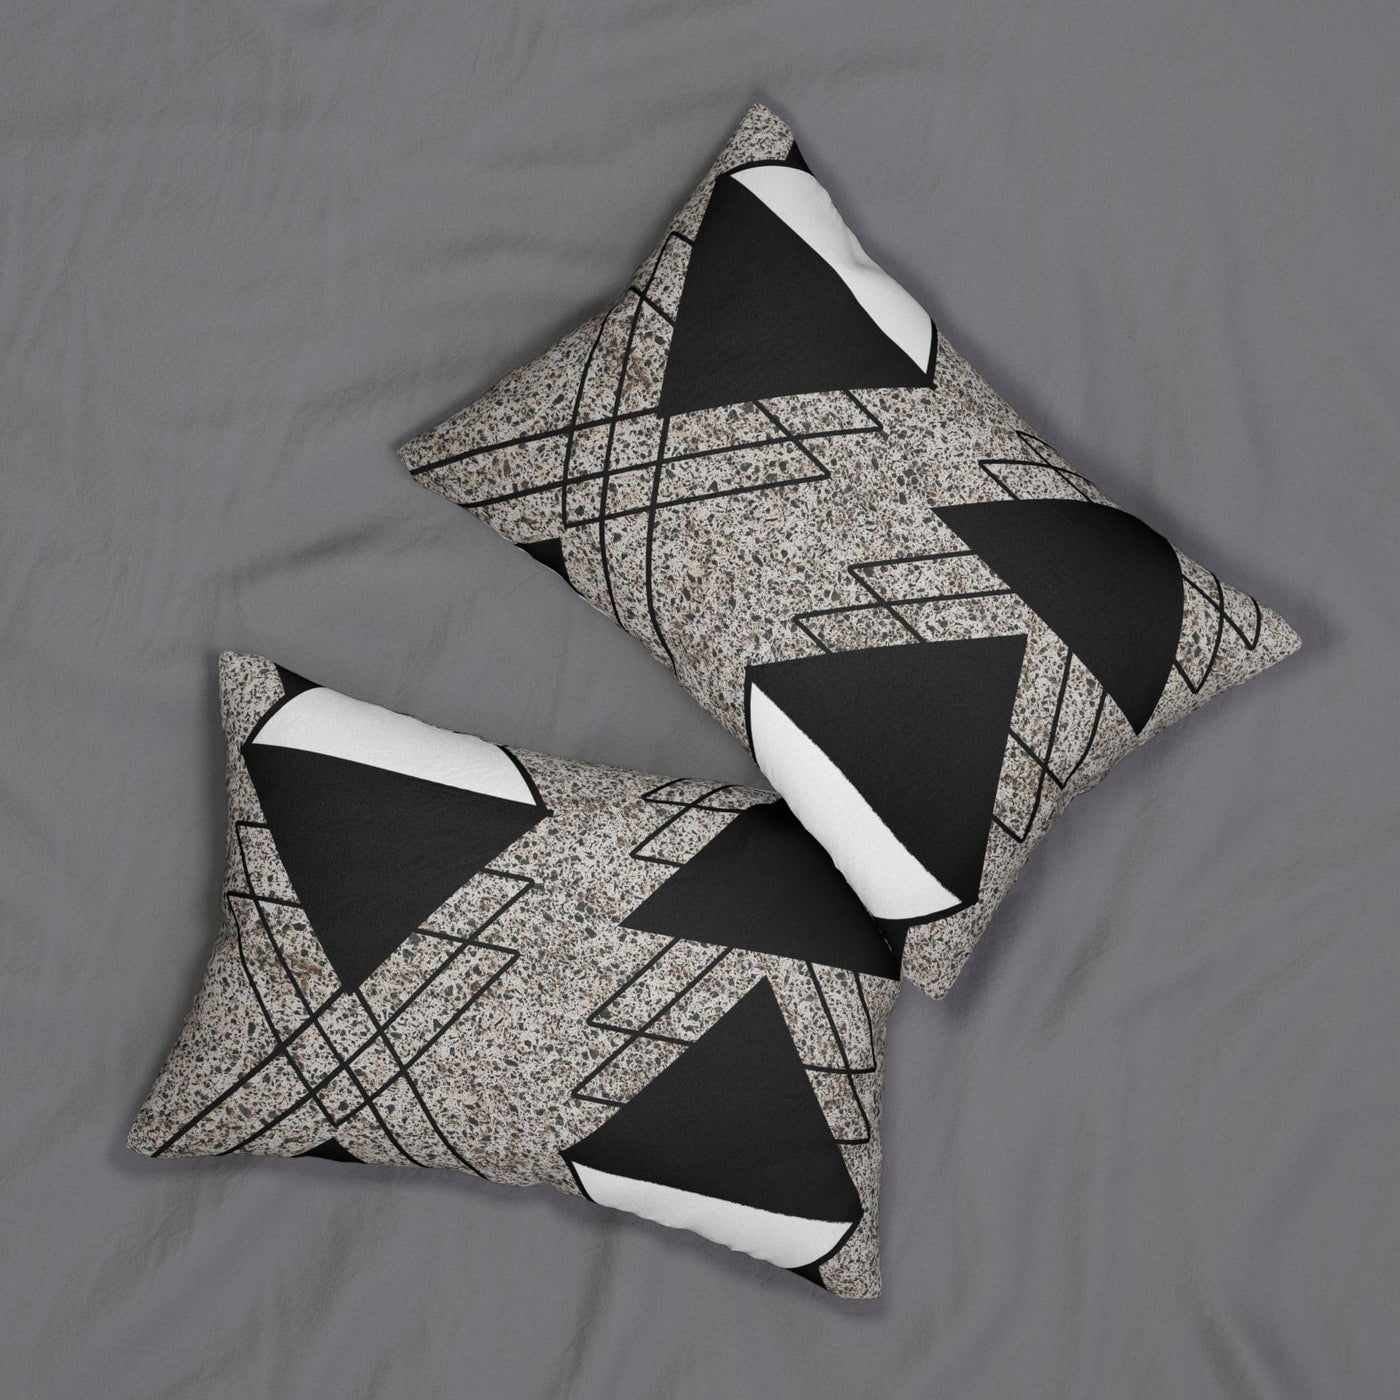 Decorative Lumbar Throw Pillow - Black And White Triangular Colorblock